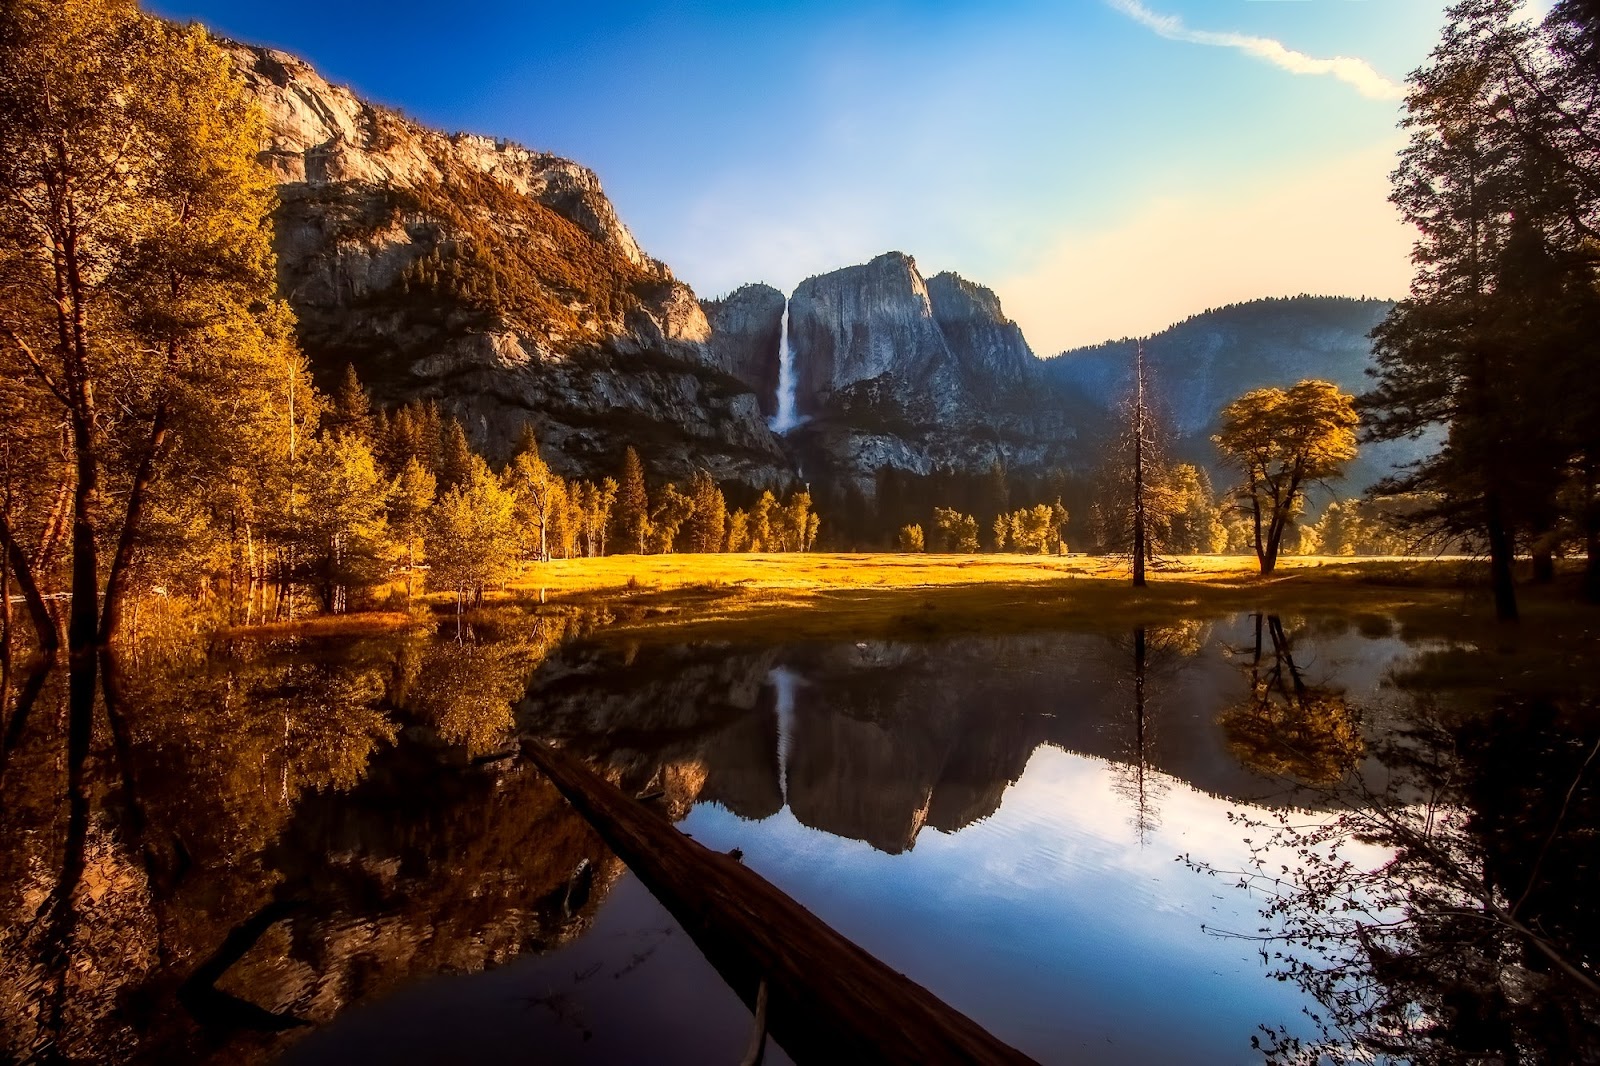 Lake and cliffside at Yosemite